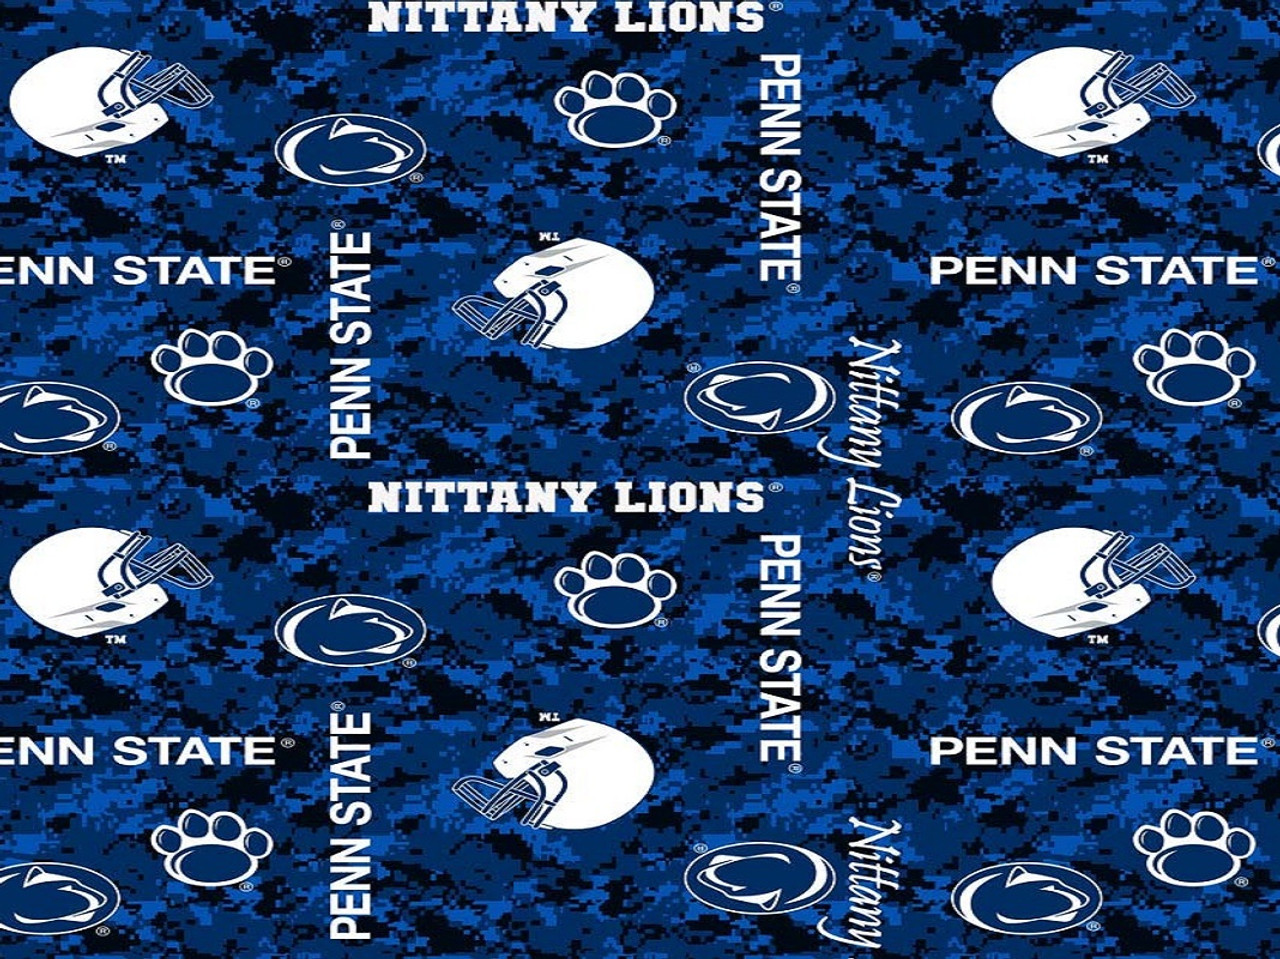 Penn State Nittany Lions Digi Camo Fleece Fabric Remnants